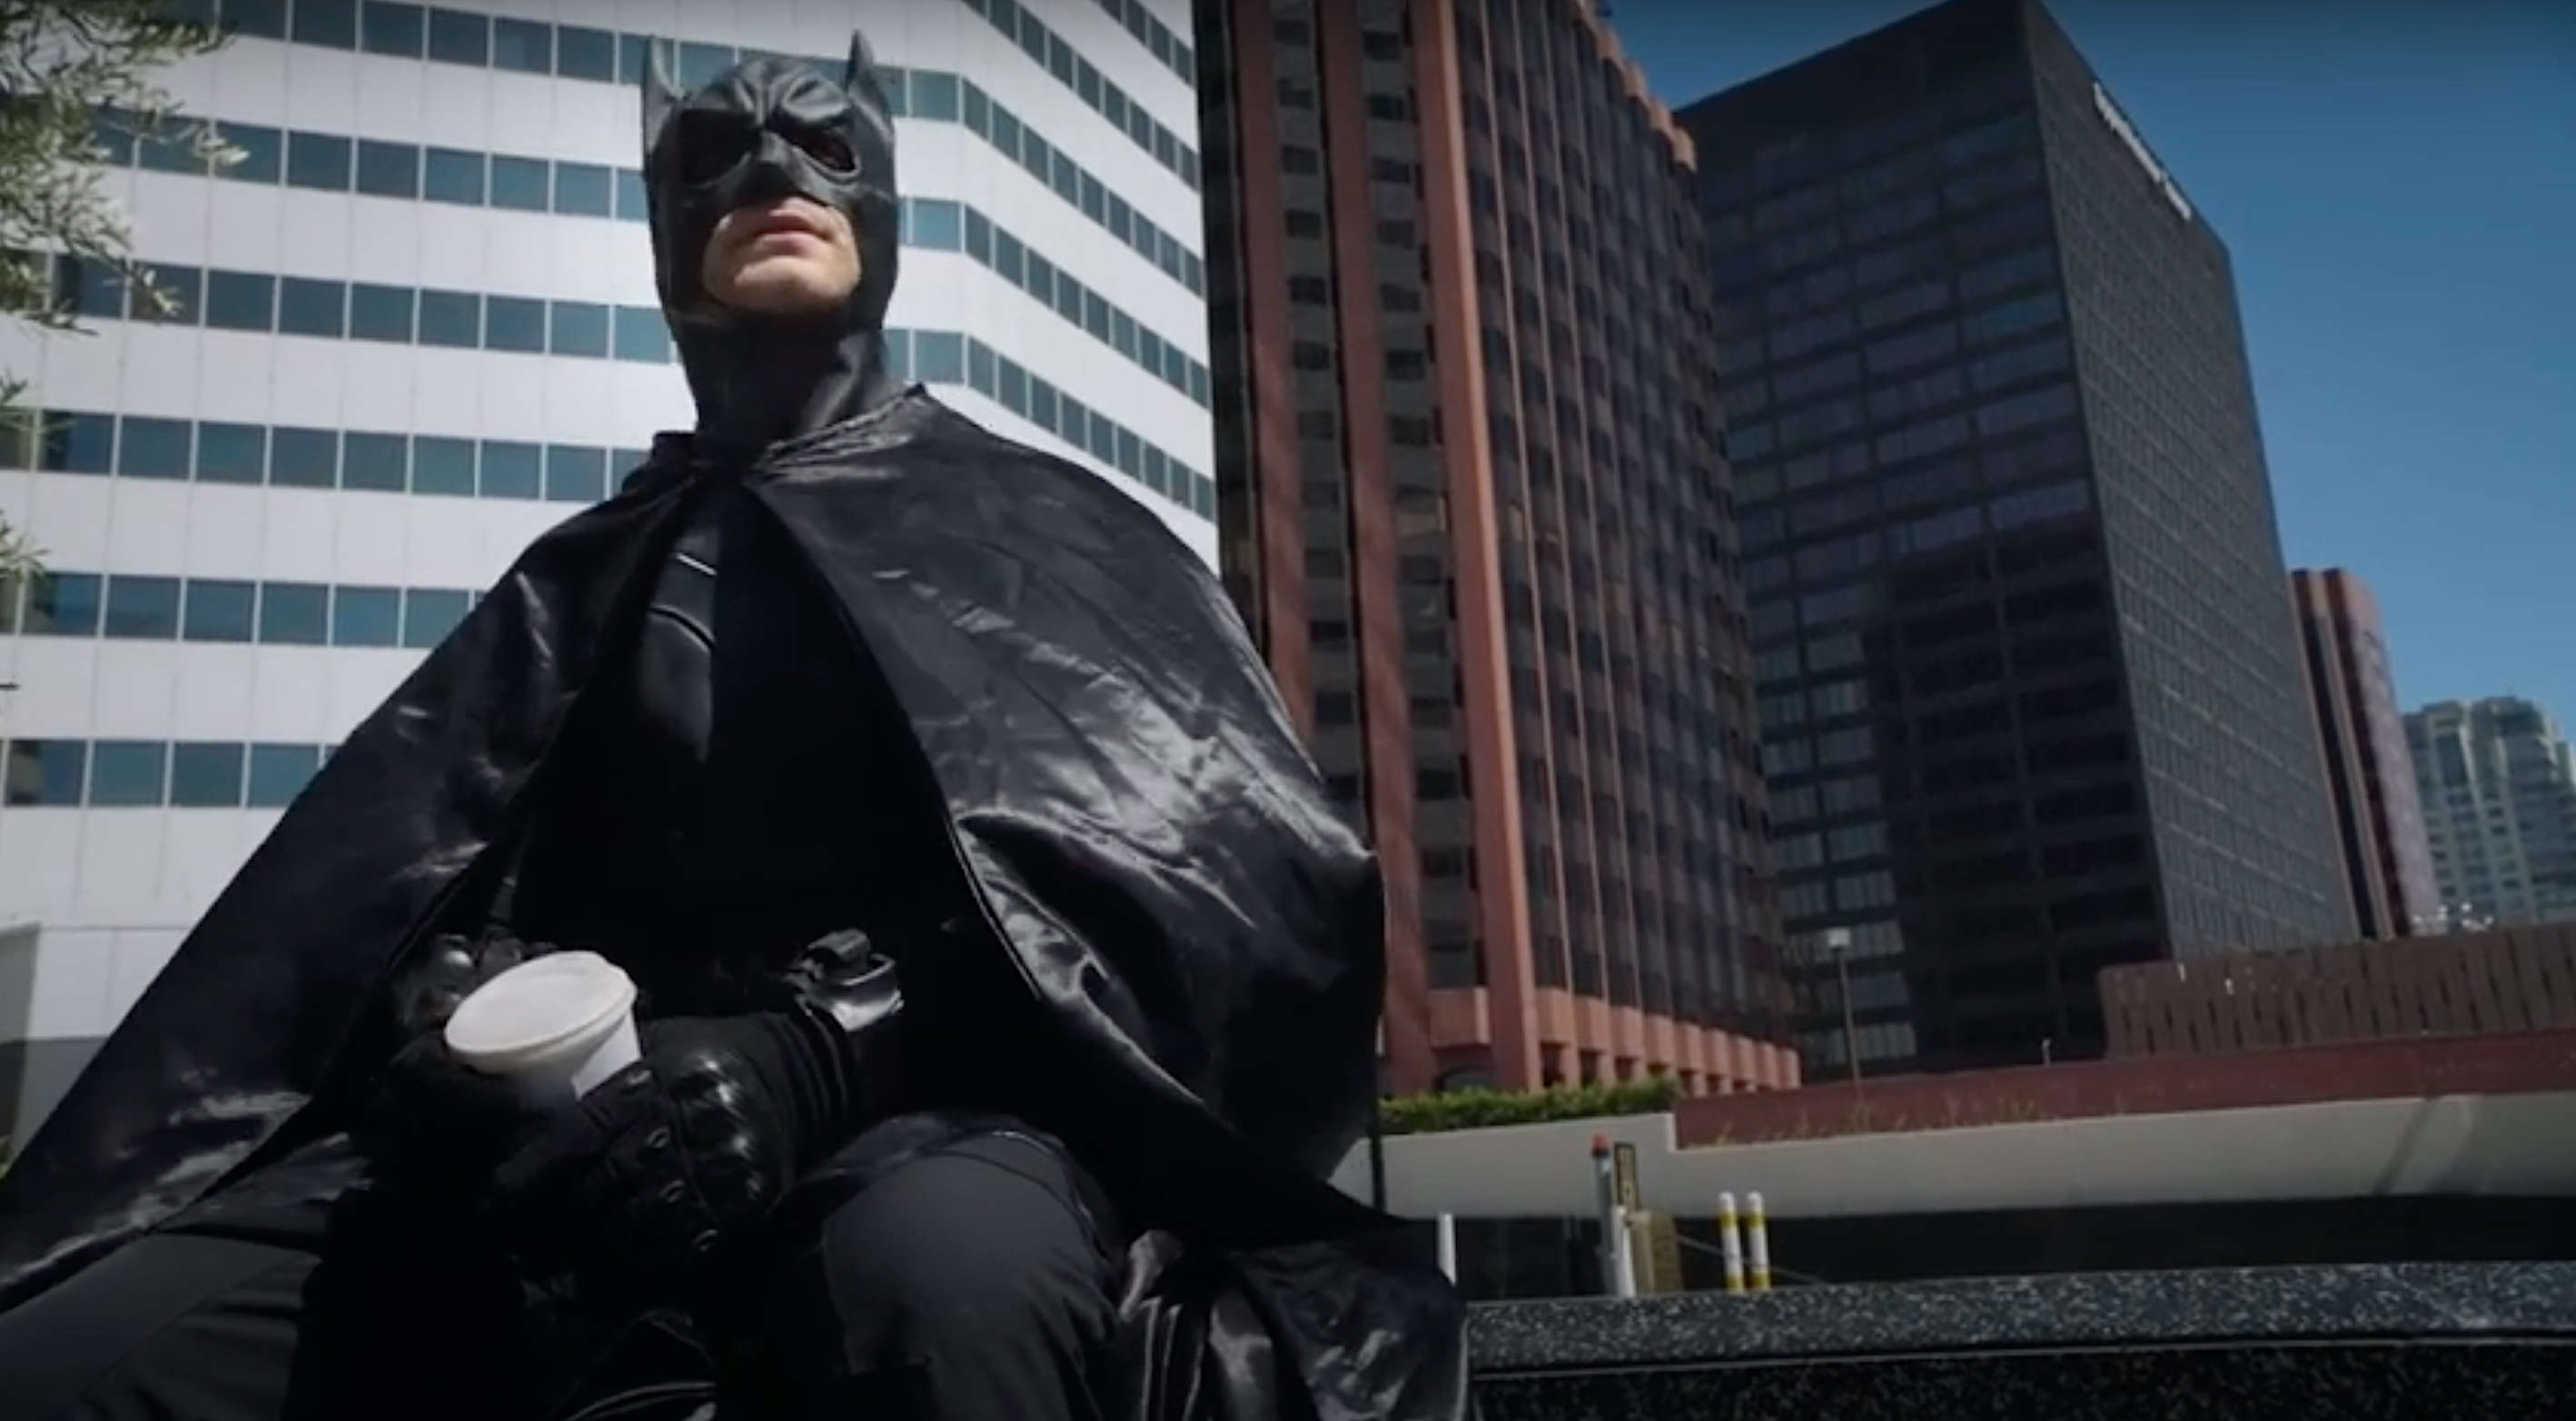 Batman in Gotham for COVID Relief parody